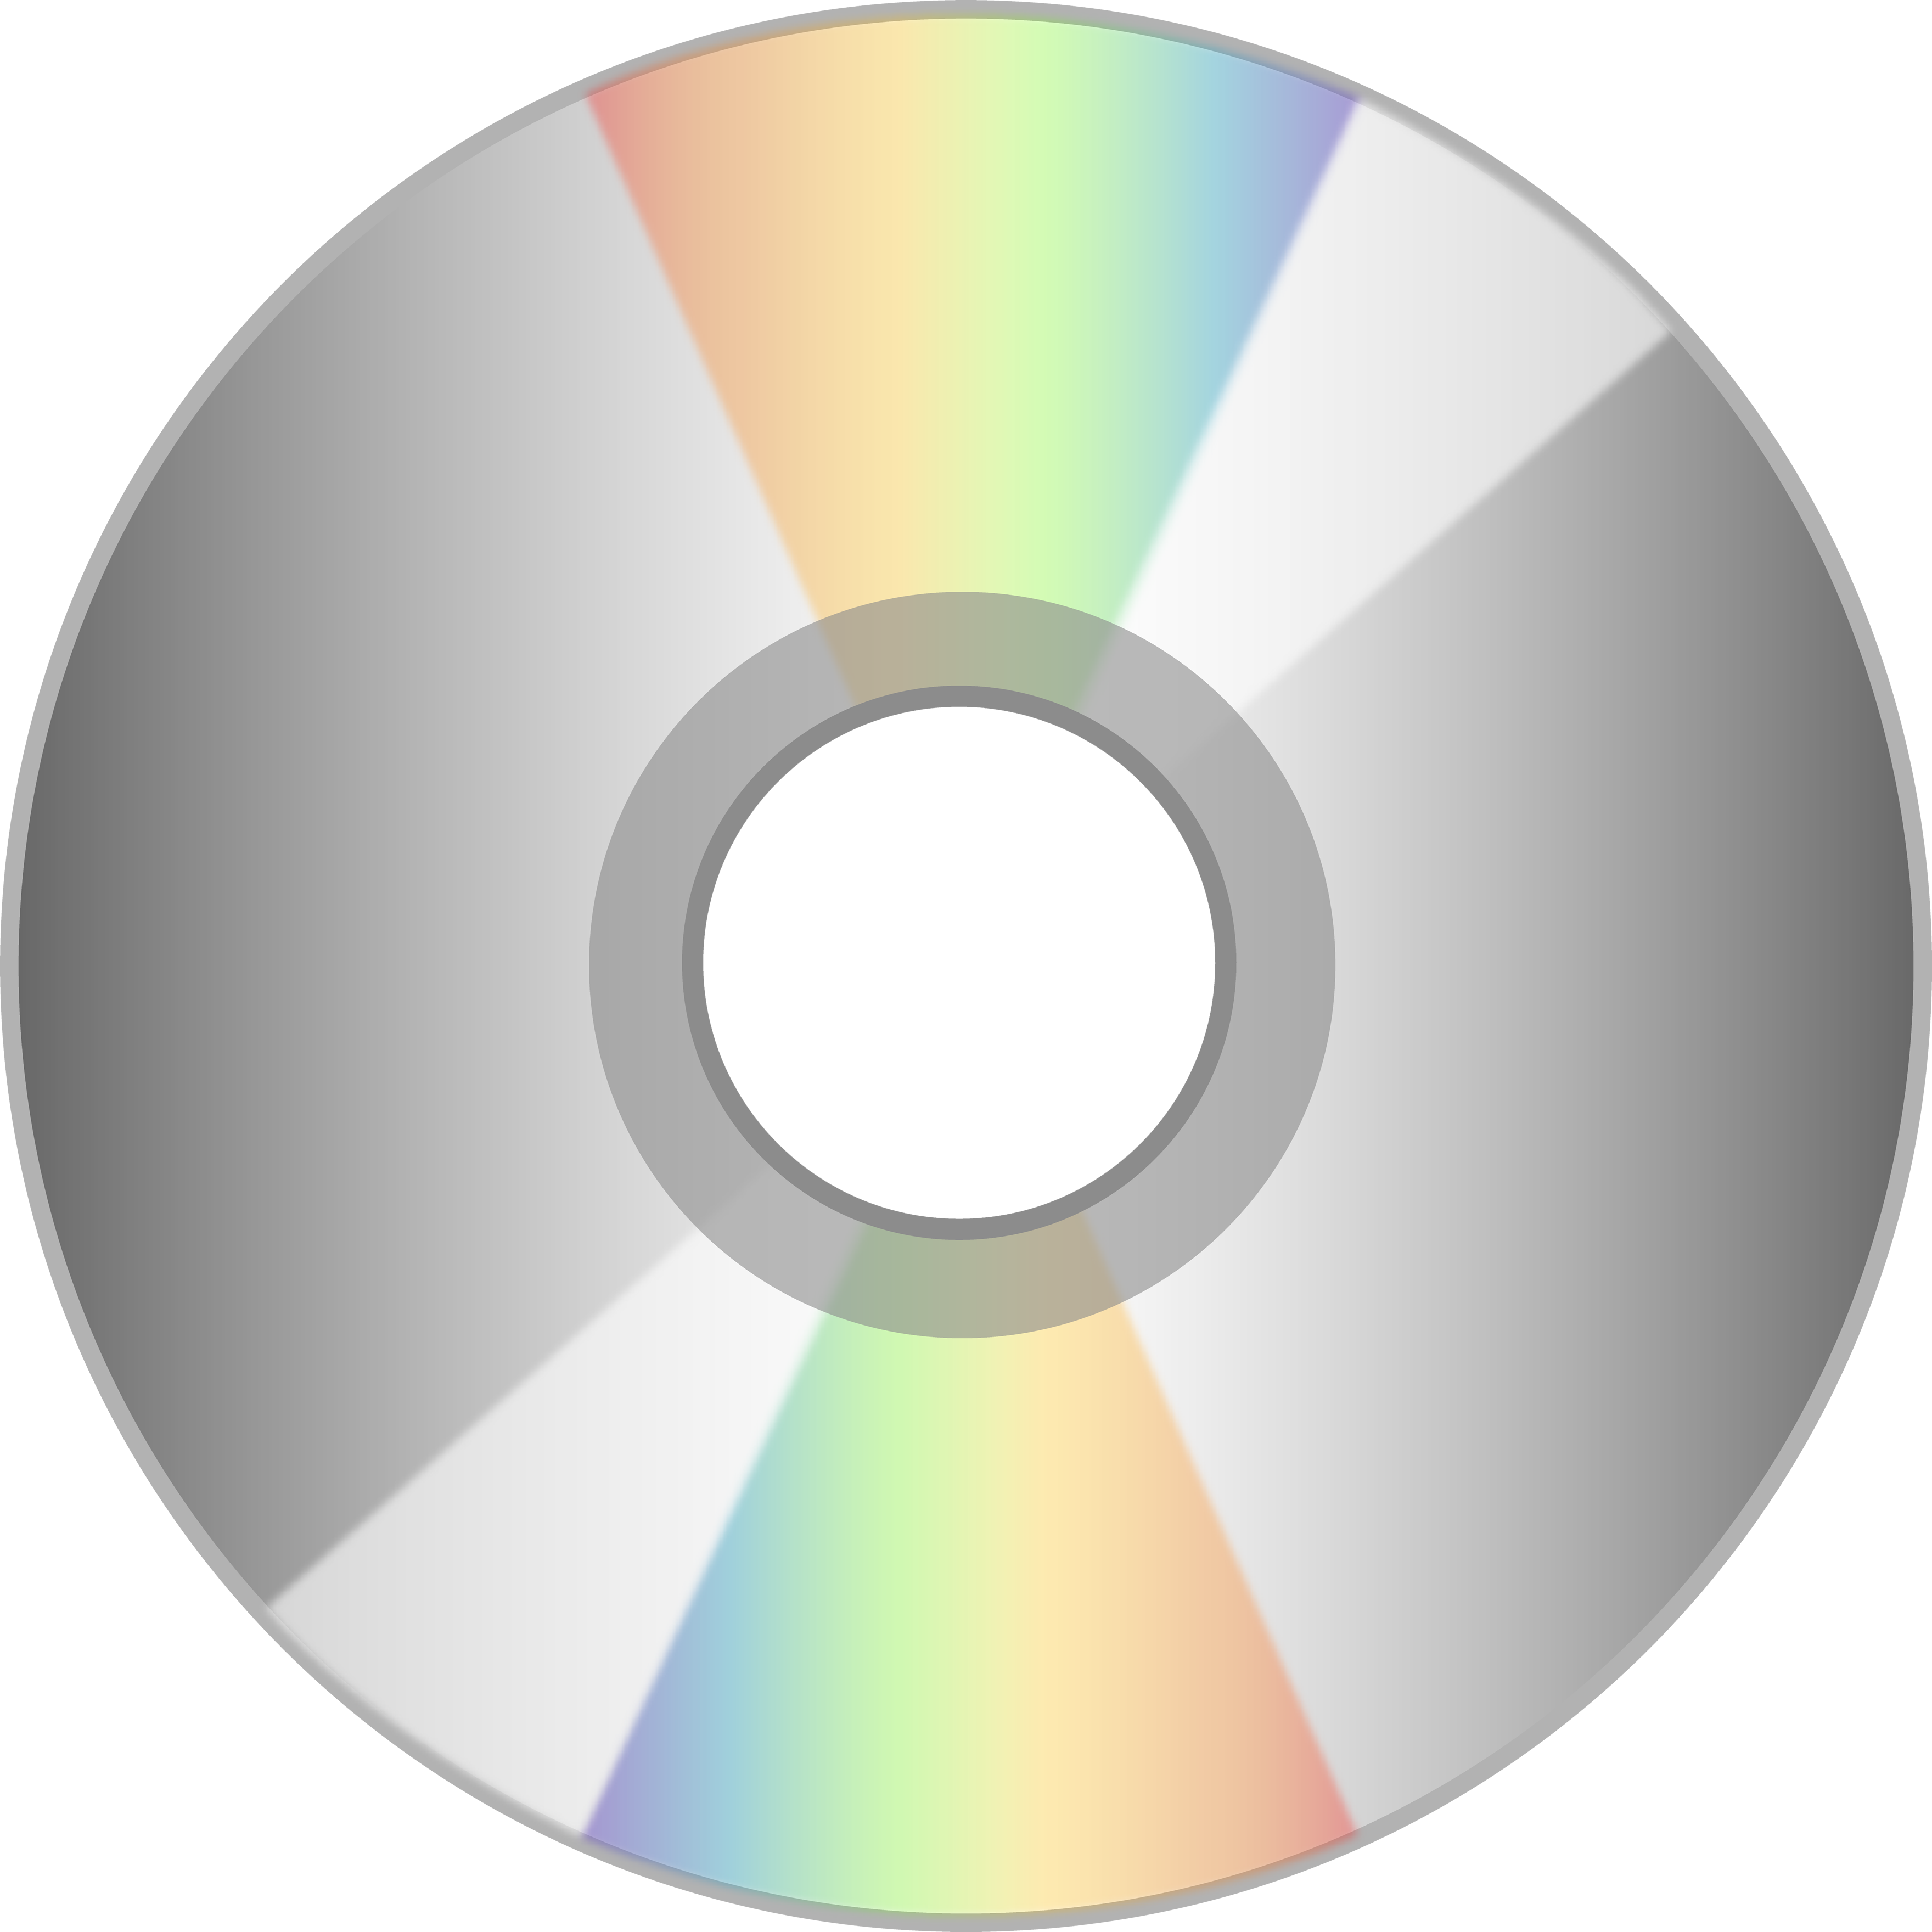 Compact Disk CD PNG HQ pngteam.com